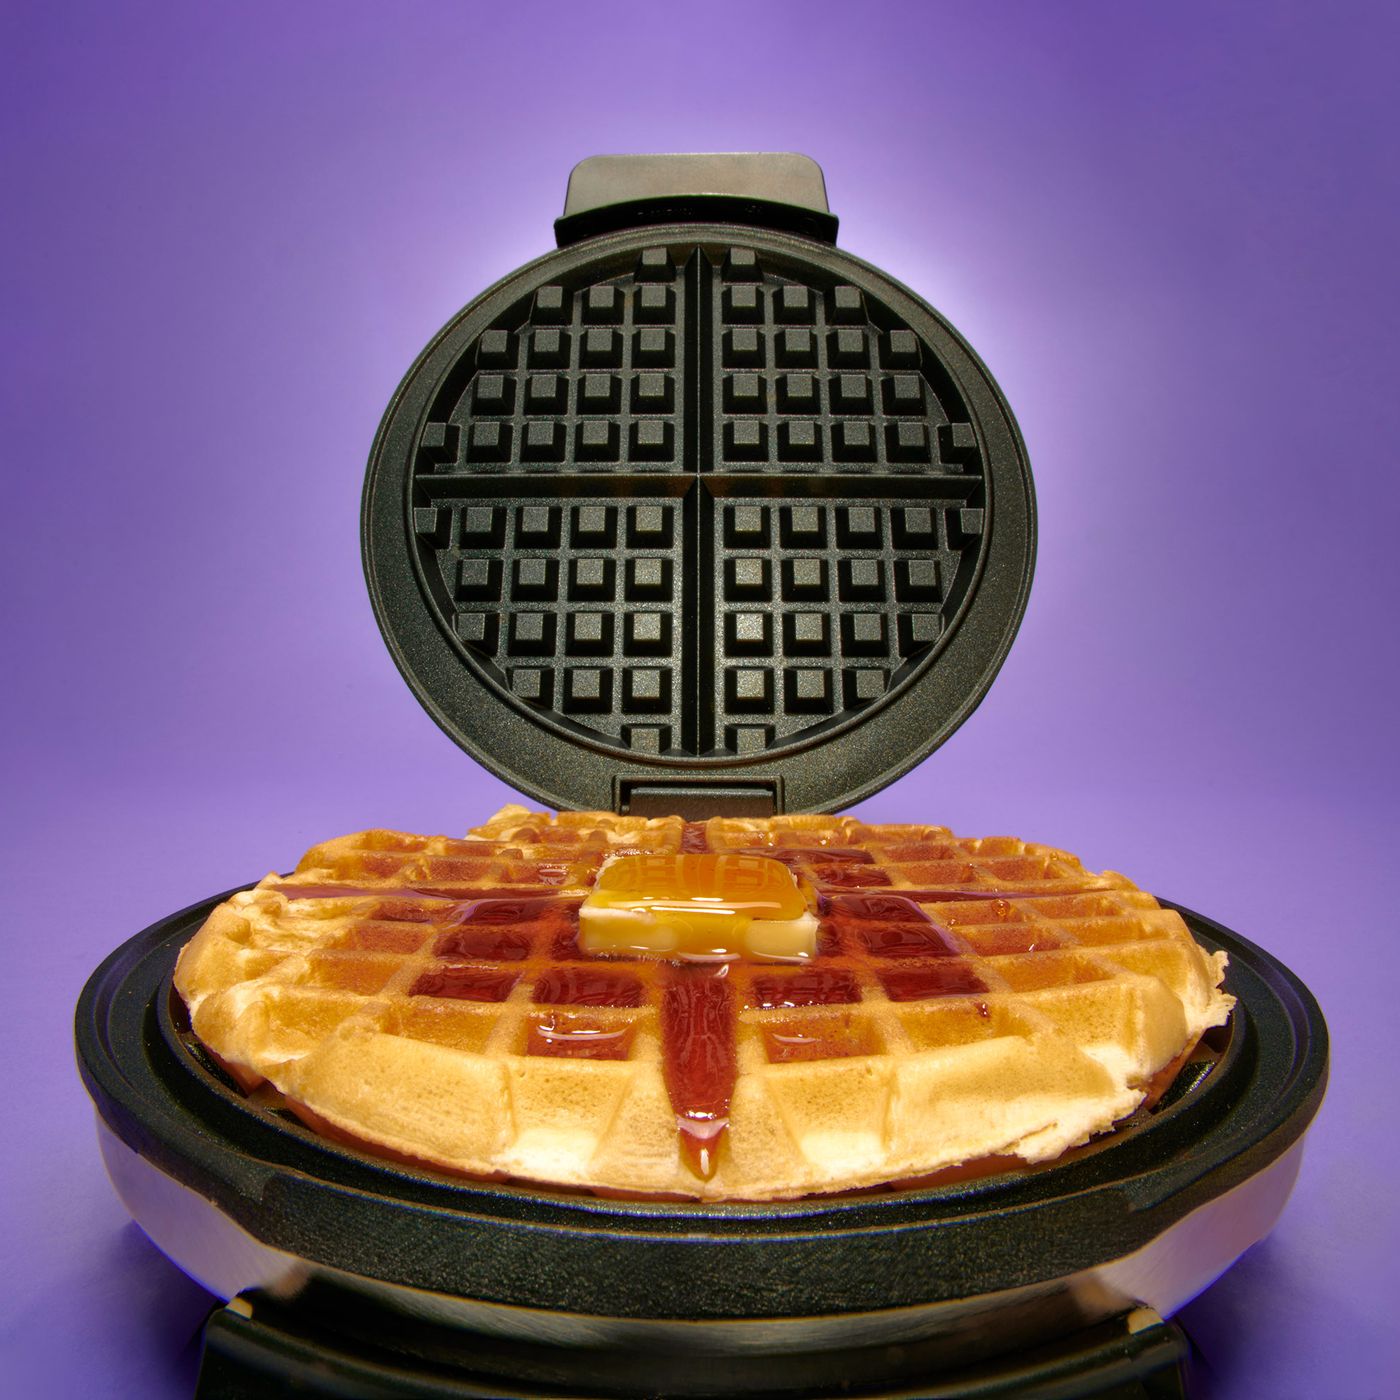 Best Ceramic Waffle Maker